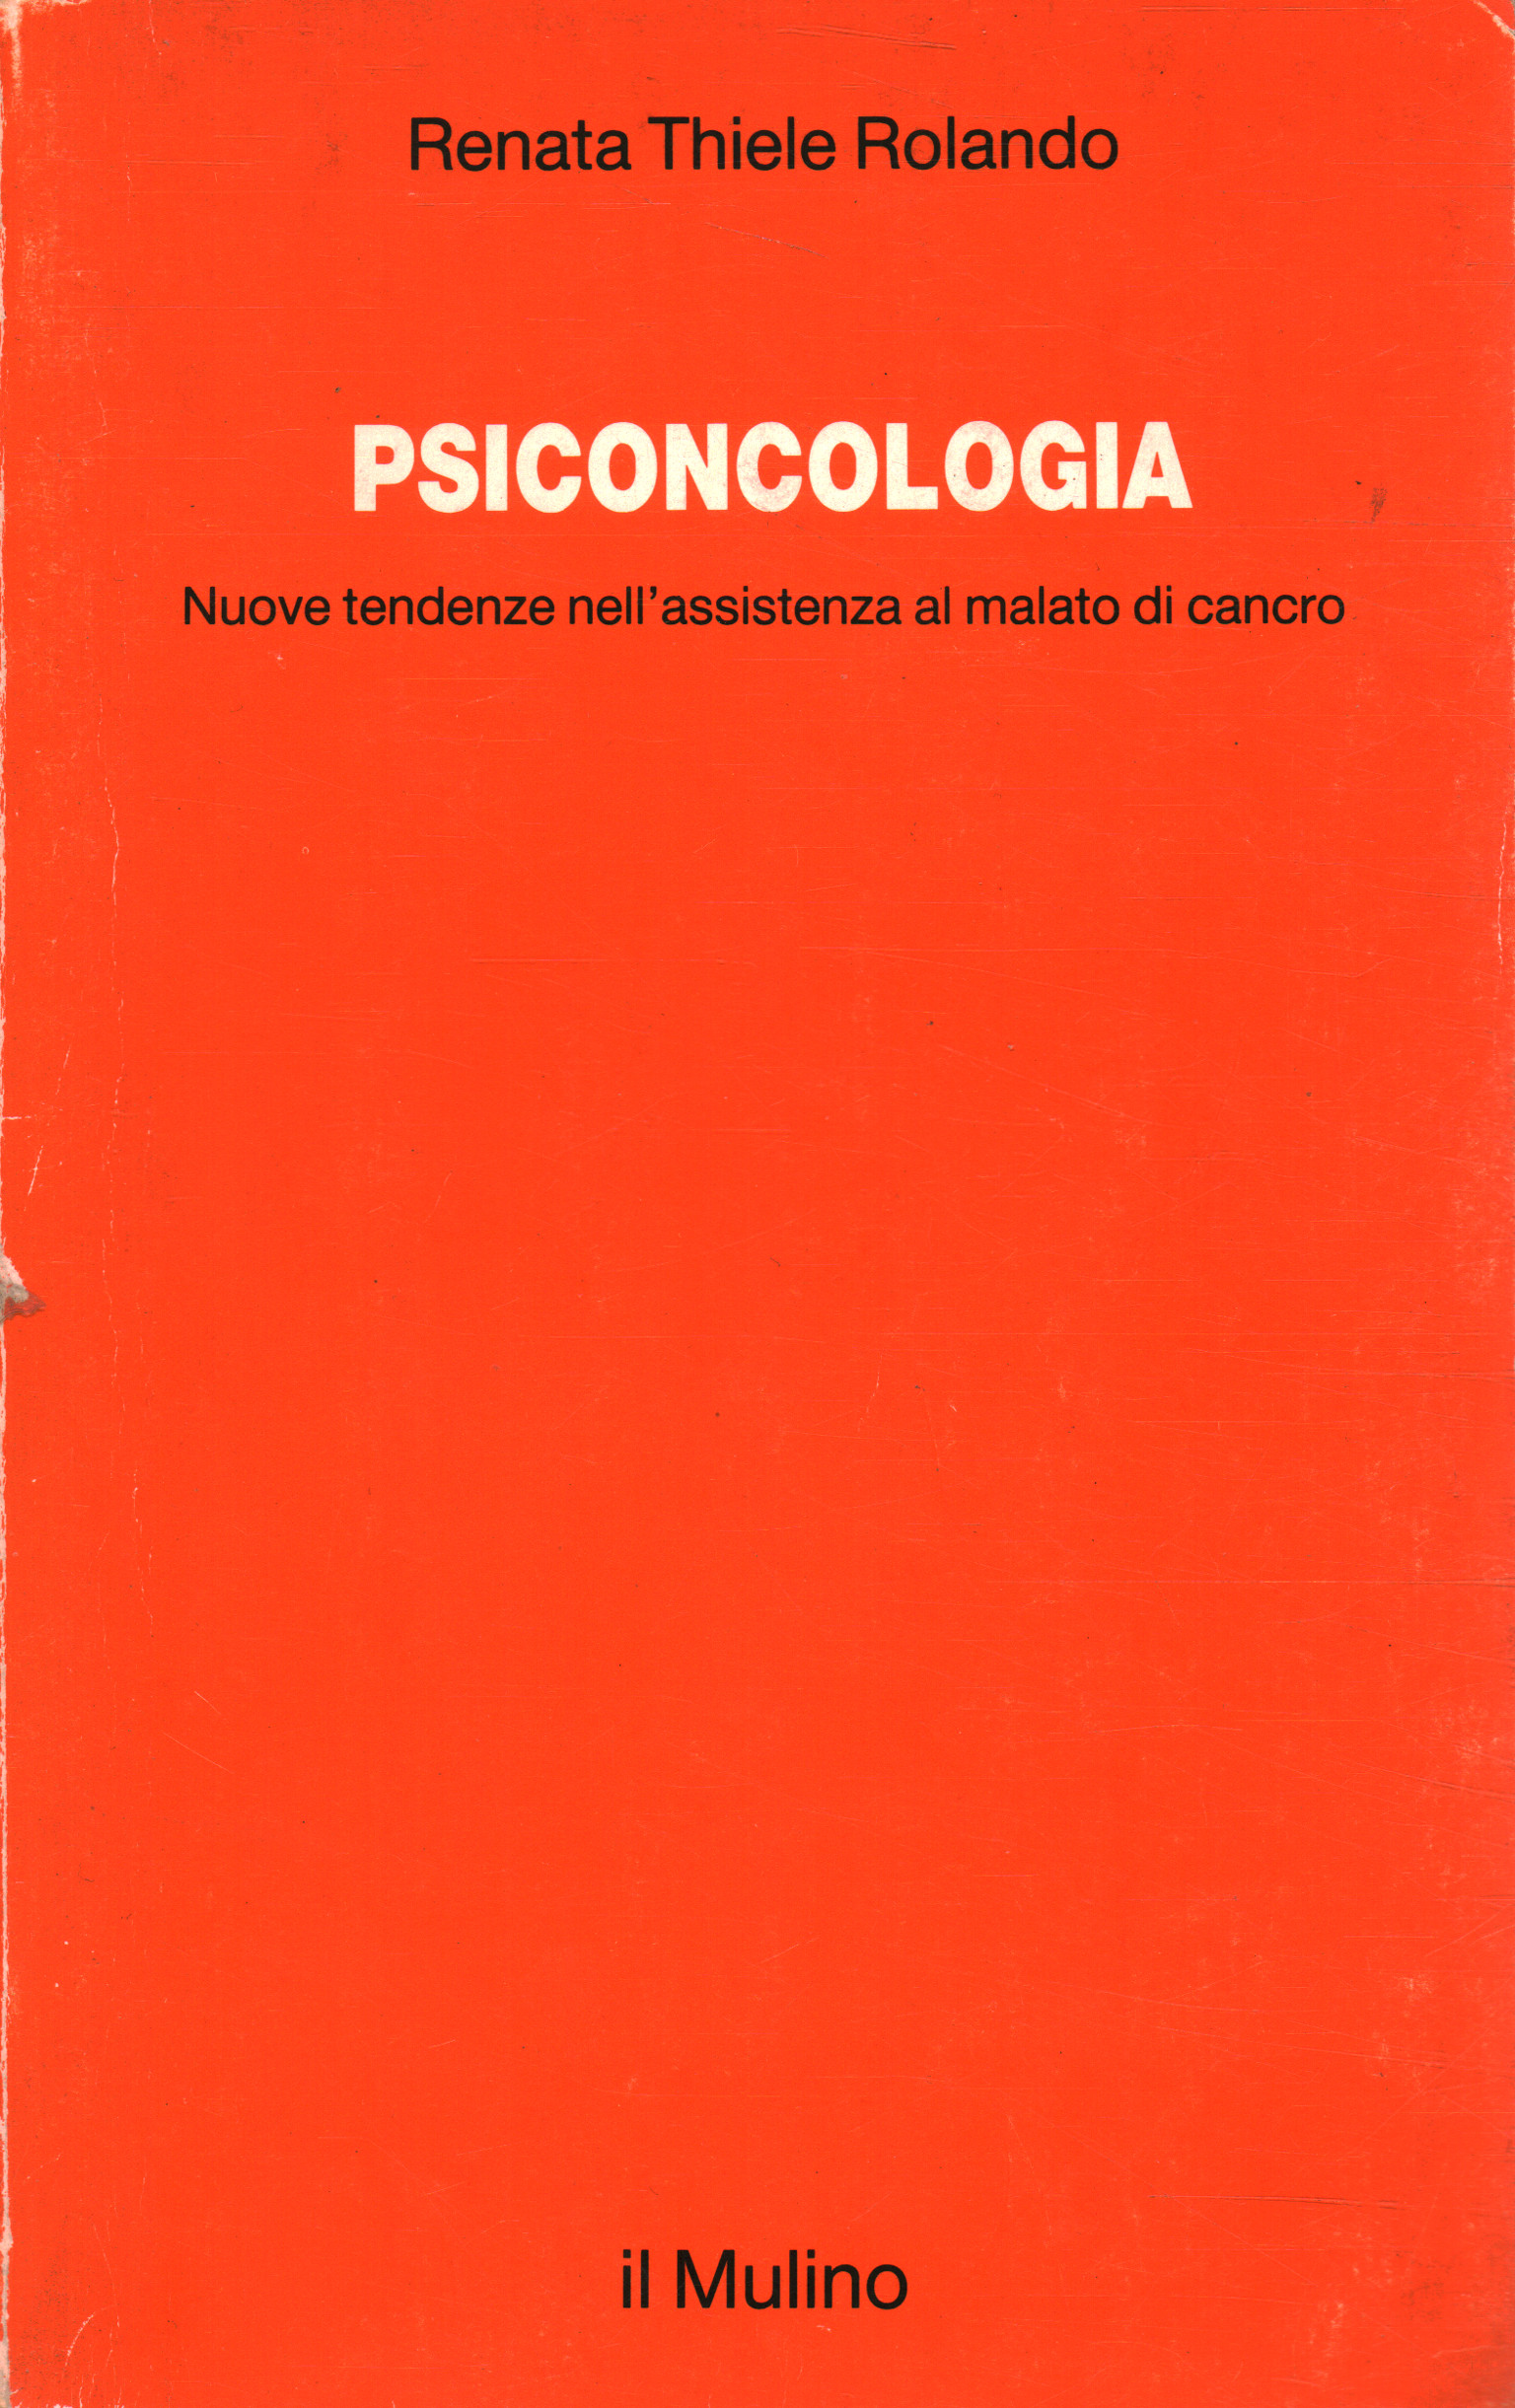 Psycho-oncology